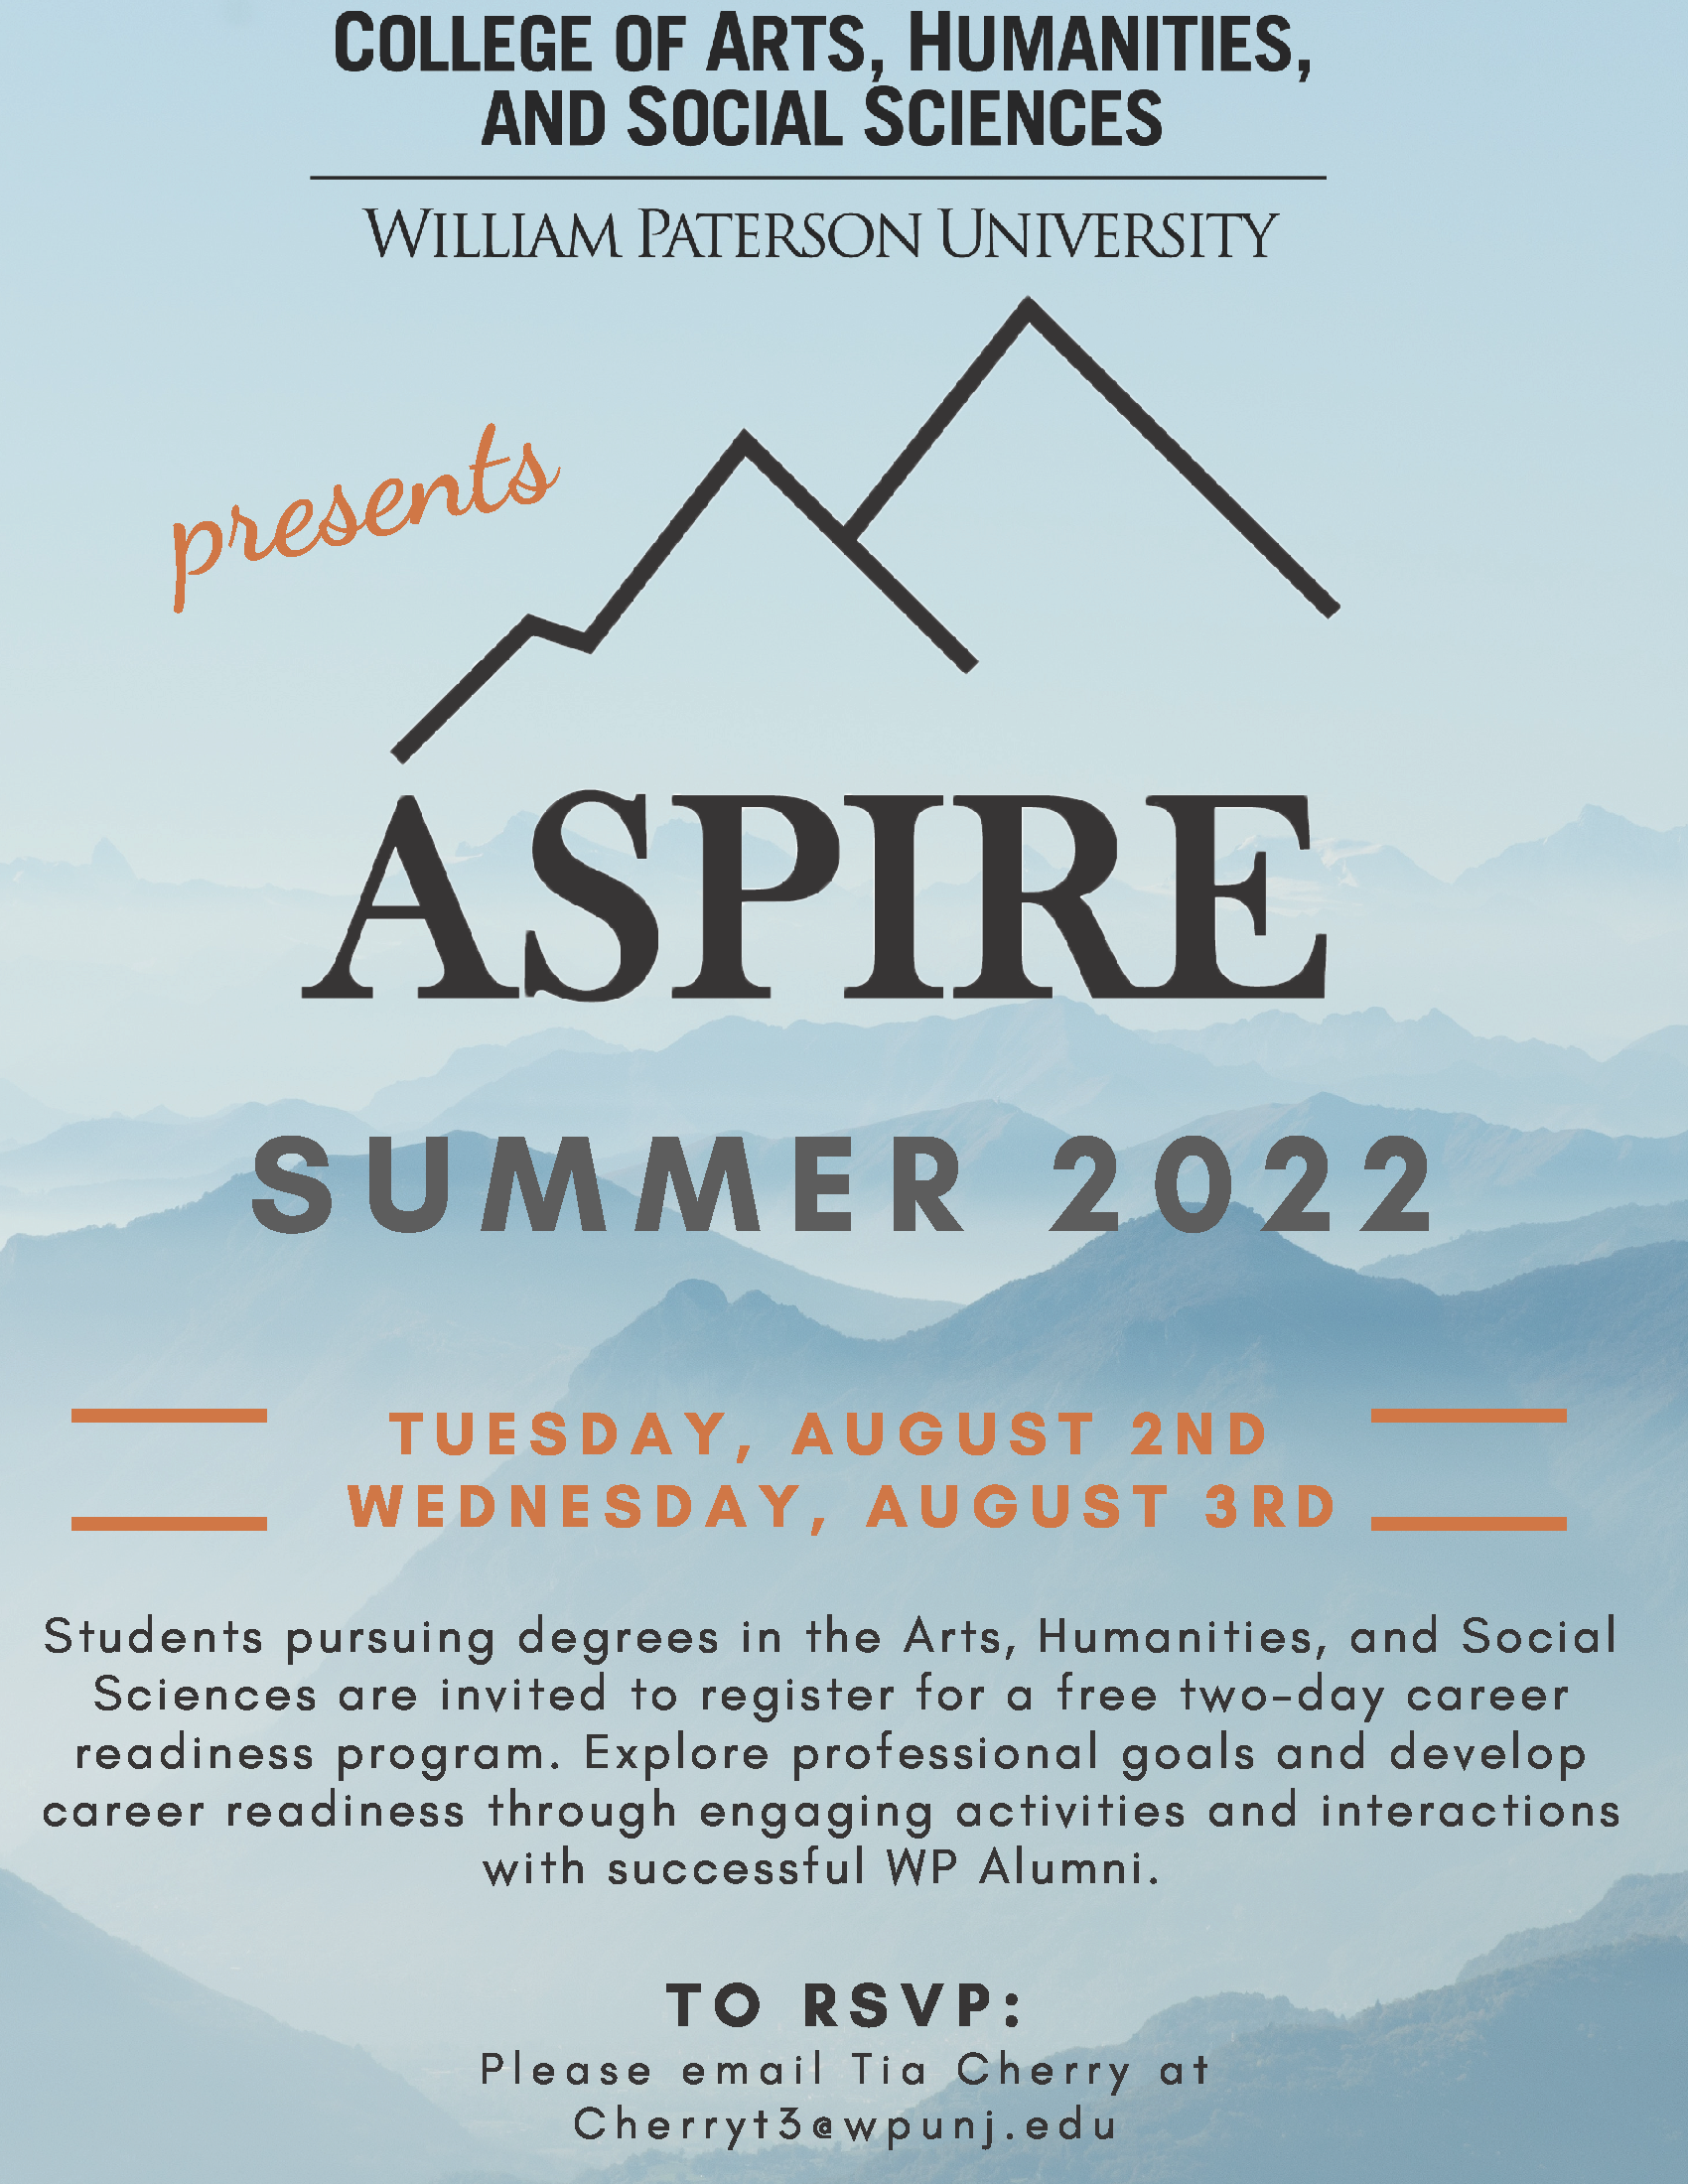 ASPIRE Summer 2022